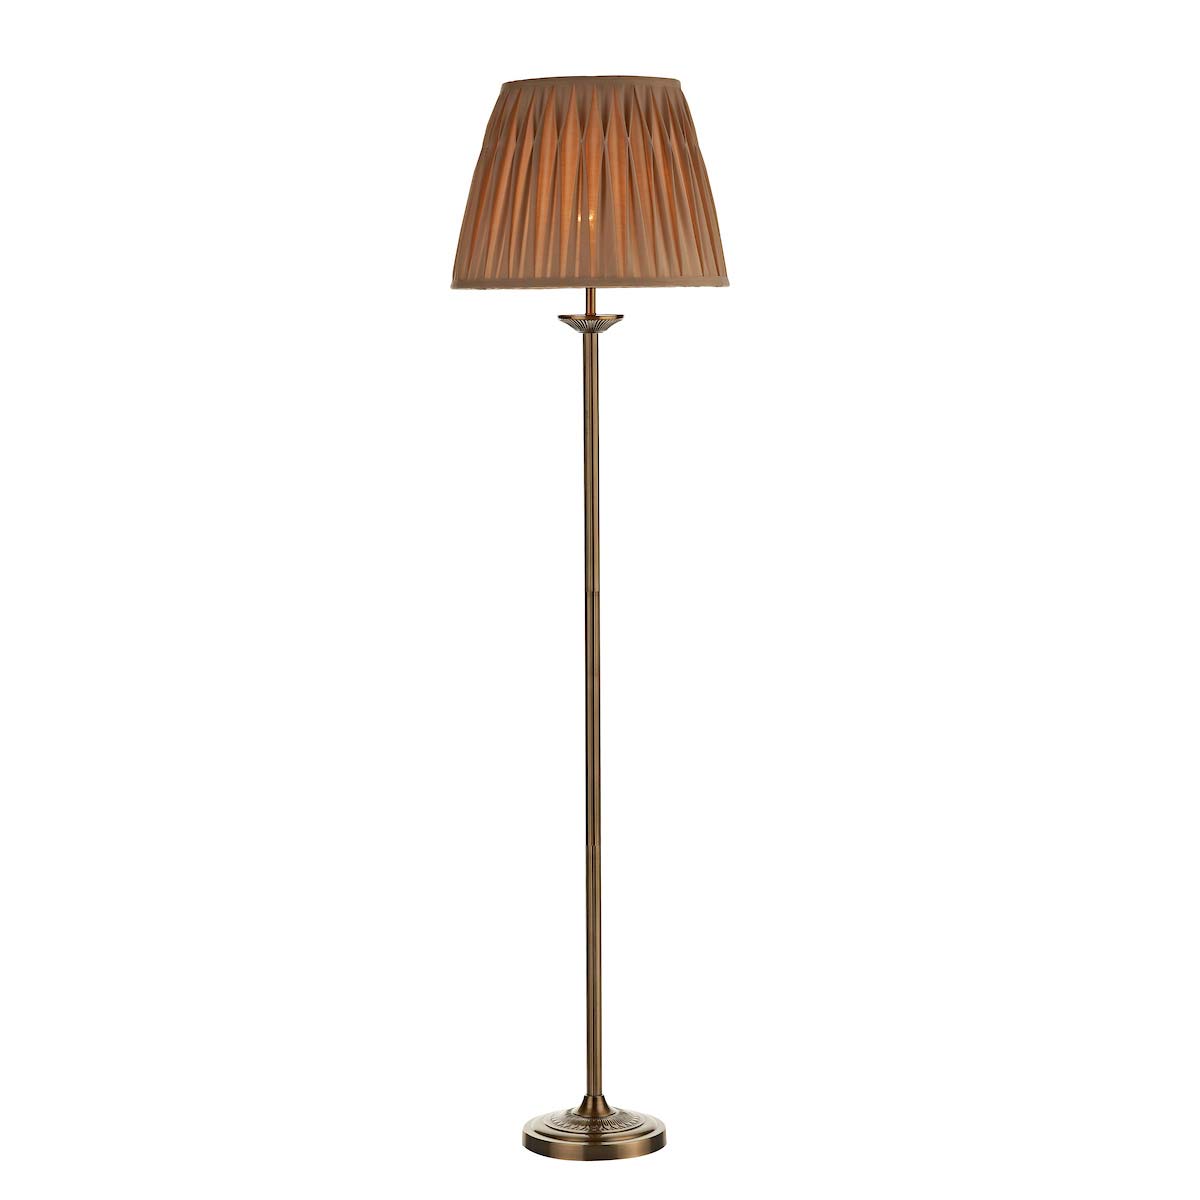 Dar Hatton Classic 1 Light Floor Lamp Standard Antique Brass With Shade